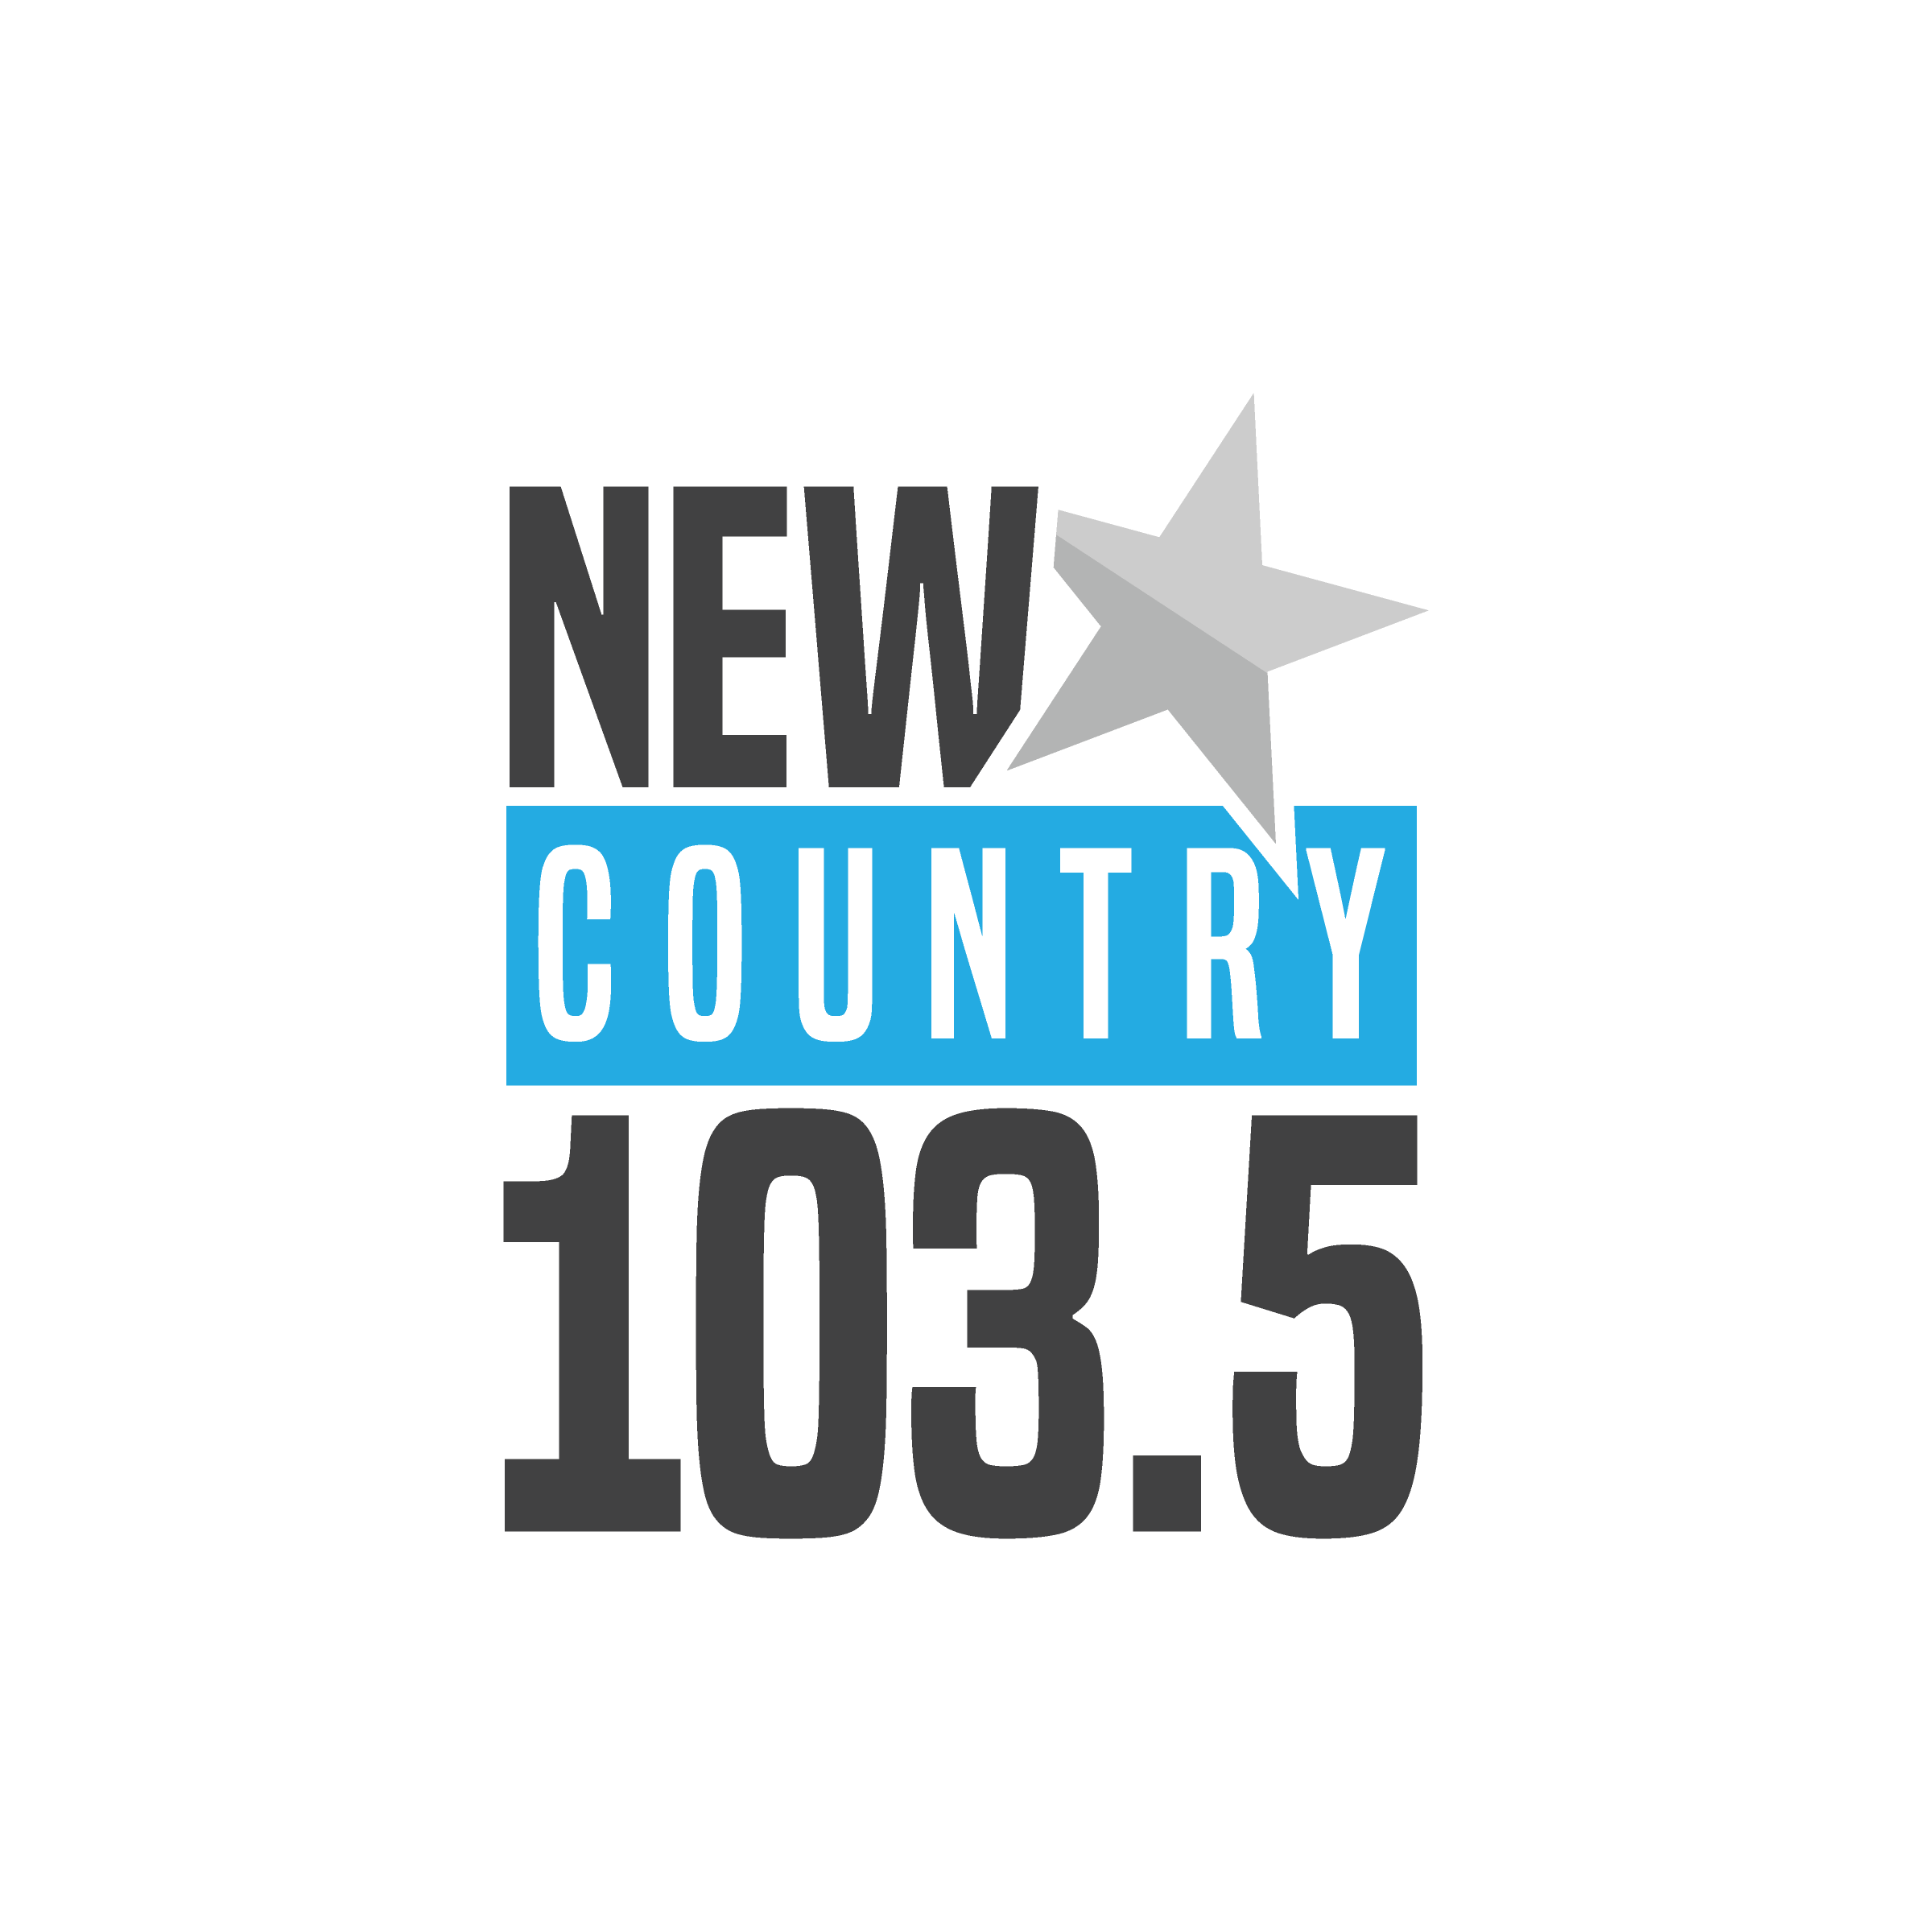 NEWC-2651-01 New Country Logo - Final Logo Colour_103.5 - RG